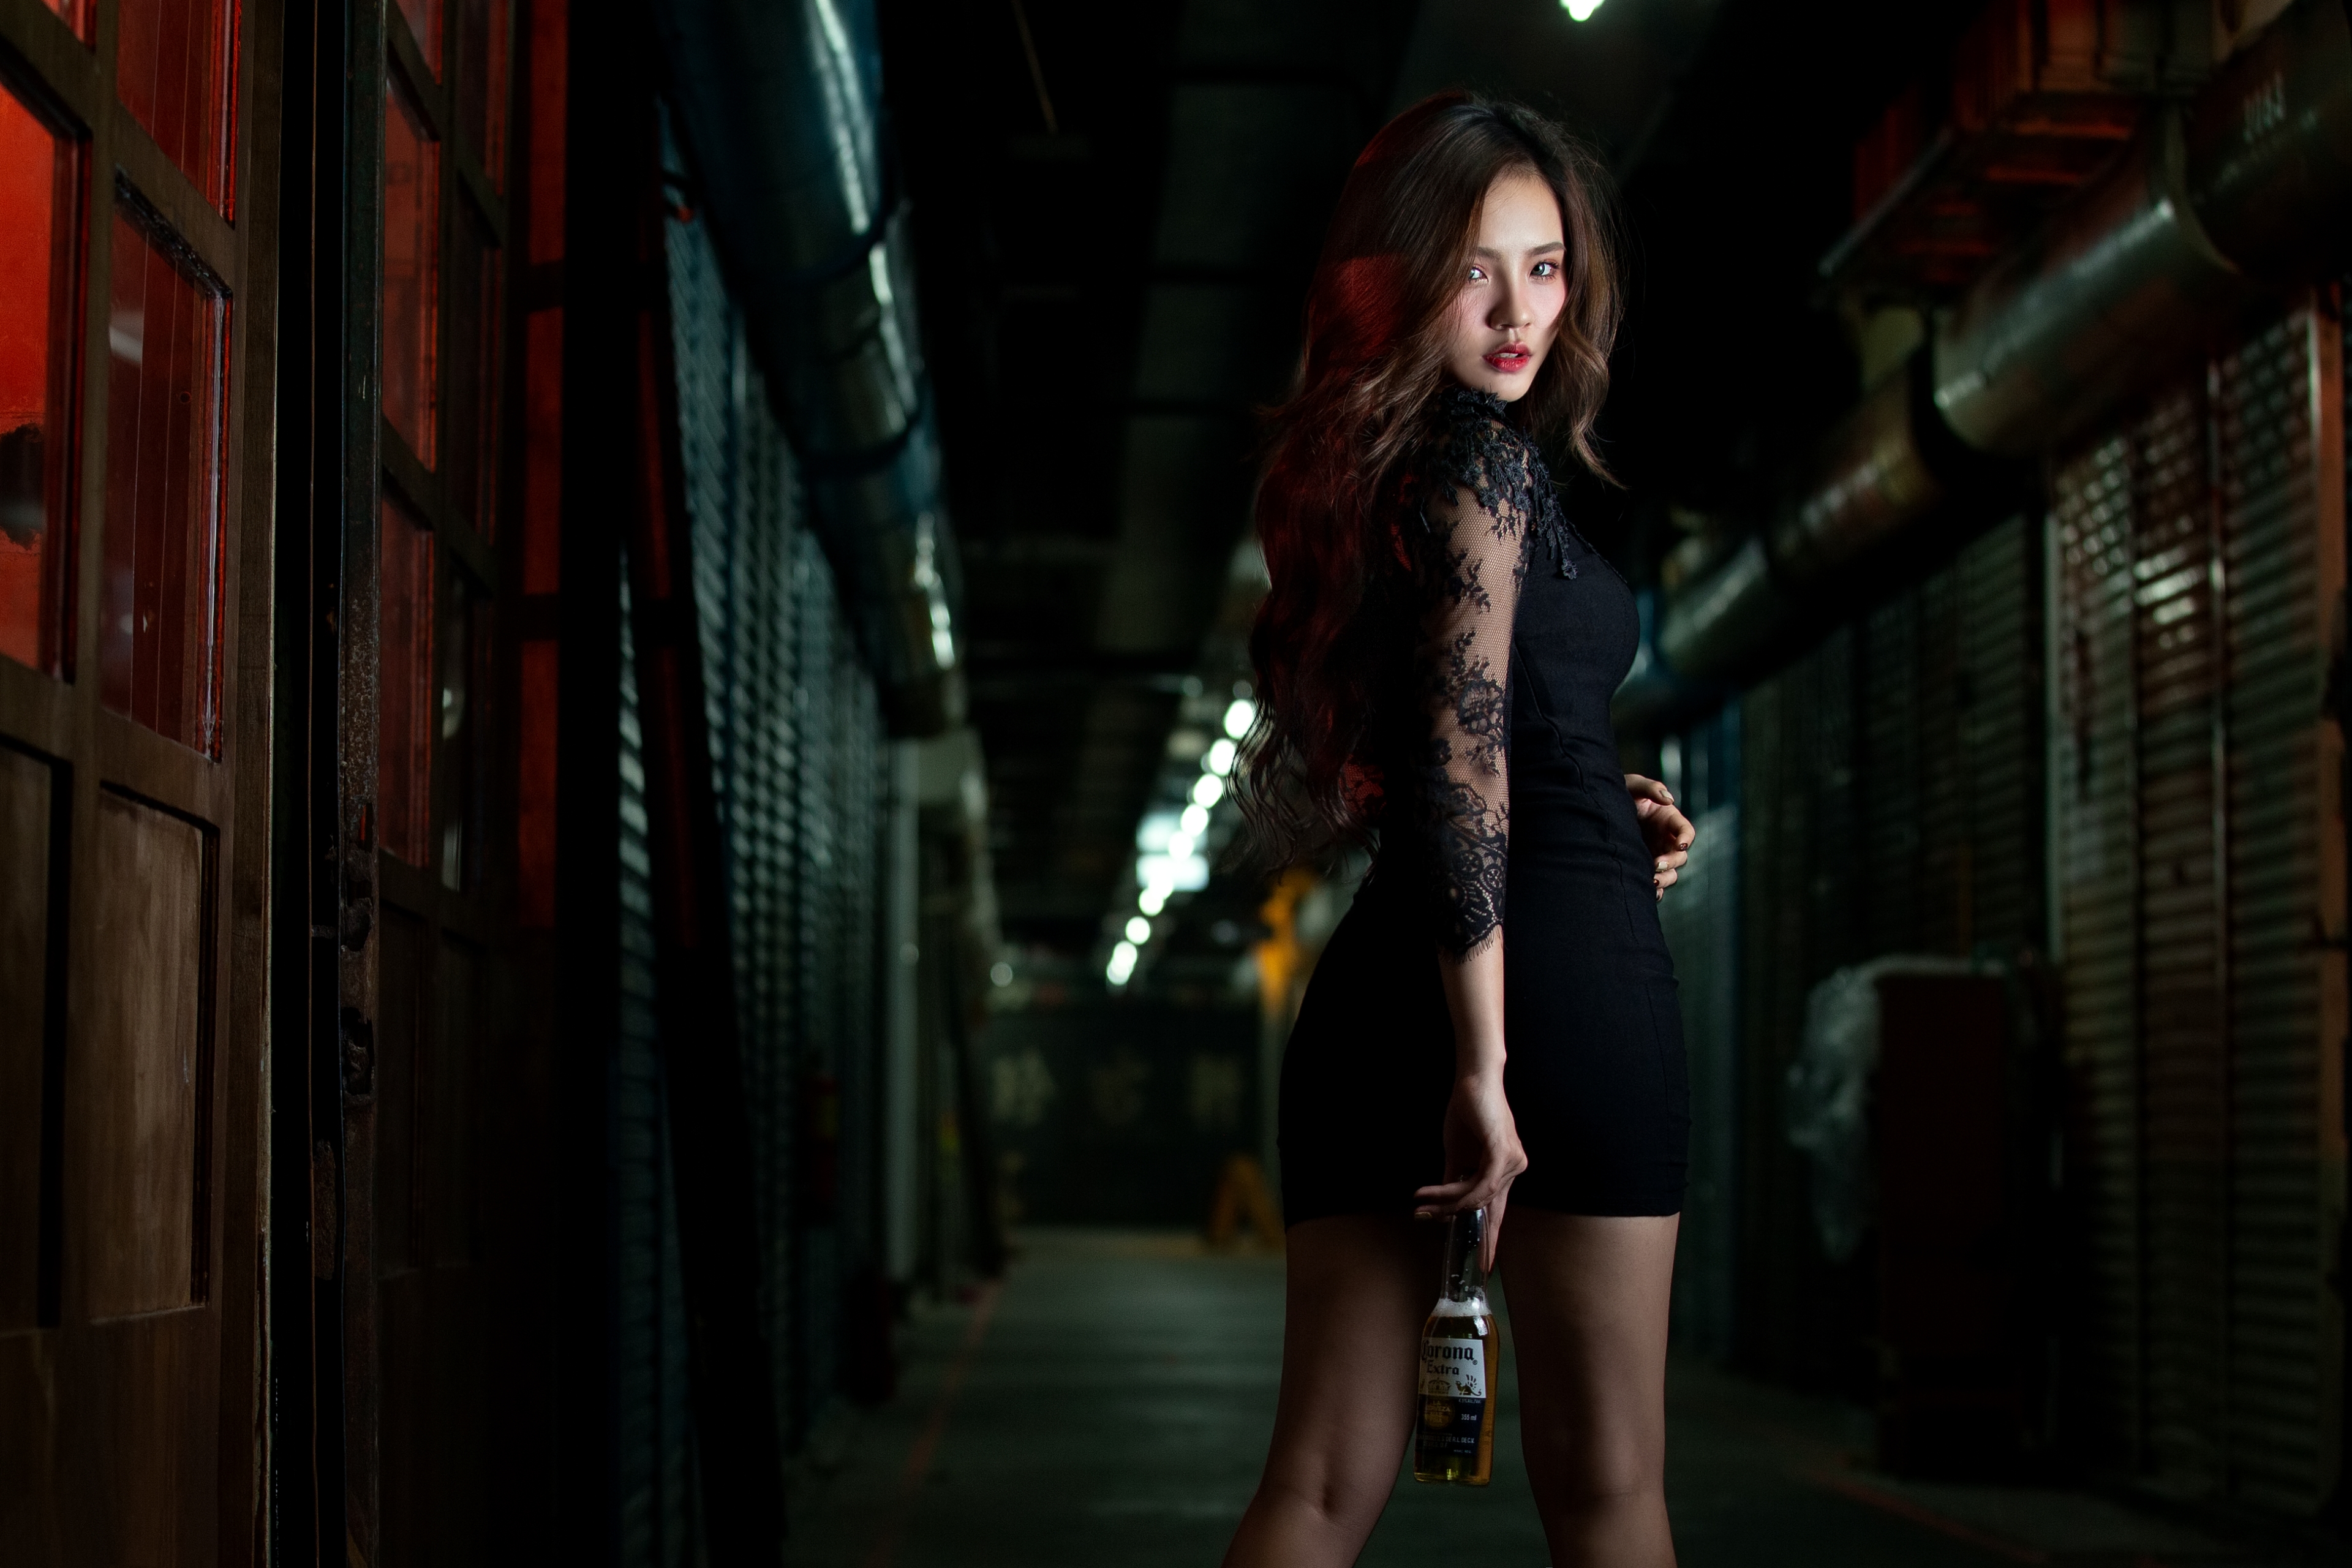 Albee Women Model Asian Brunette Corona Beer Looking At Viewer Dress Black Dress Parted Lips Hallway 3840x2560